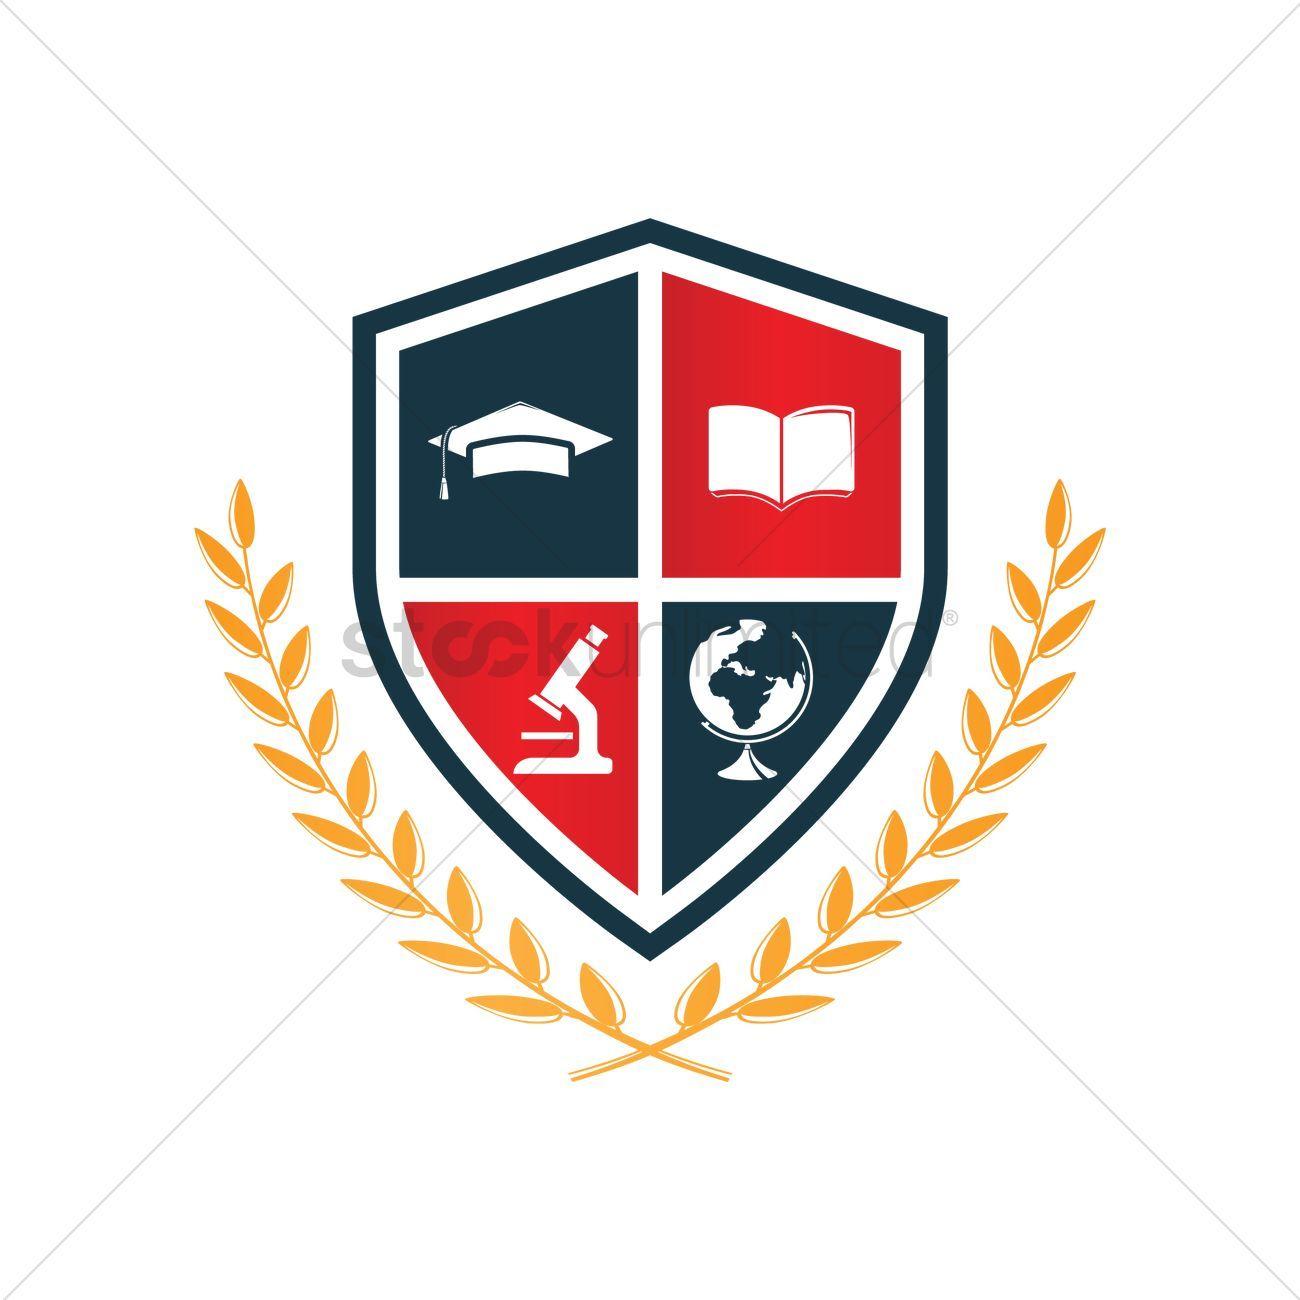 Education Logo - Education logo design Vector Image - 1969752 | StockUnlimited